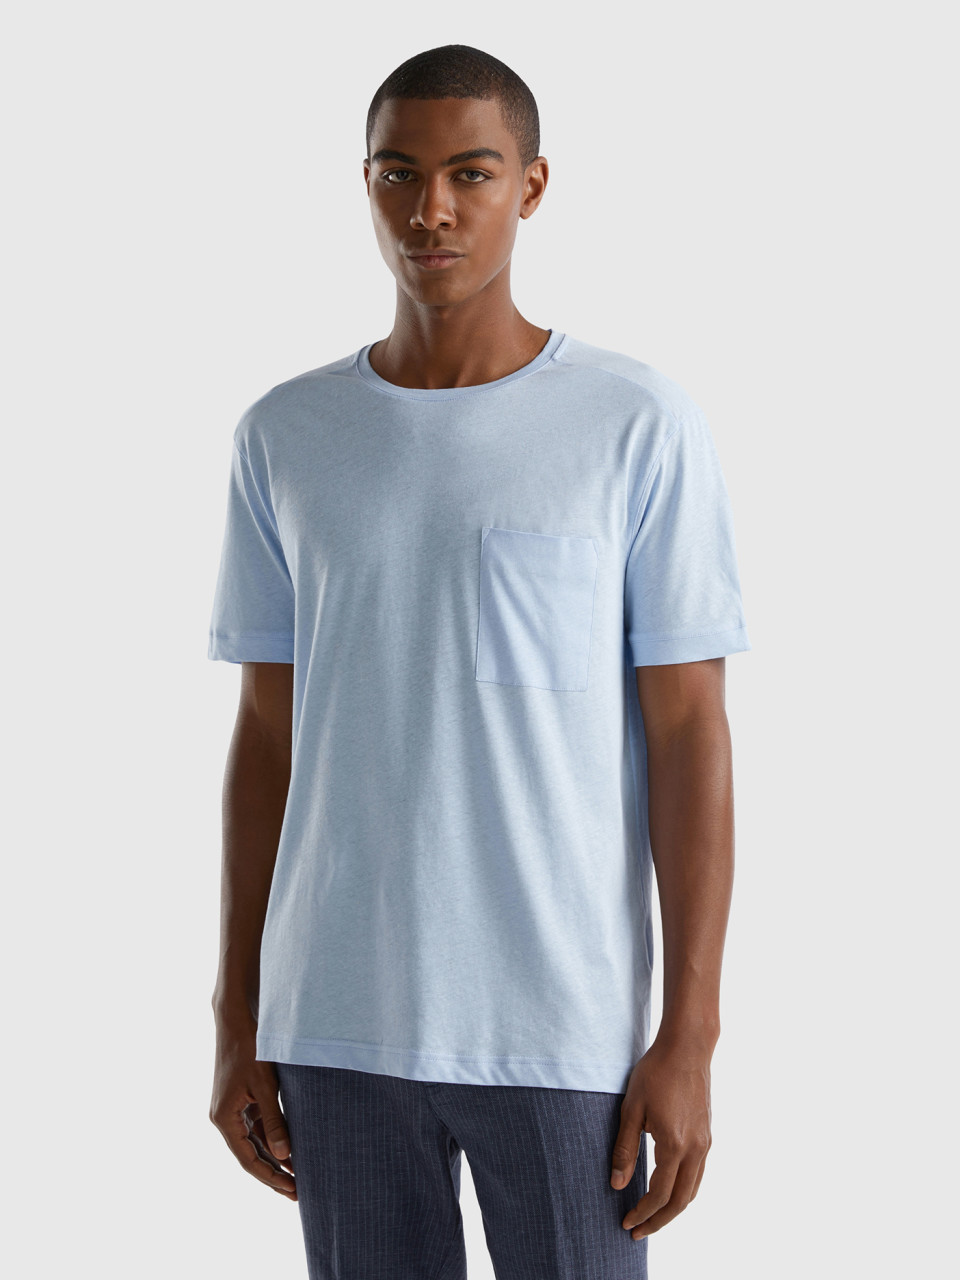 Benetton, T-shirt In Linen Blend With Pocket, Sky Blue, Men